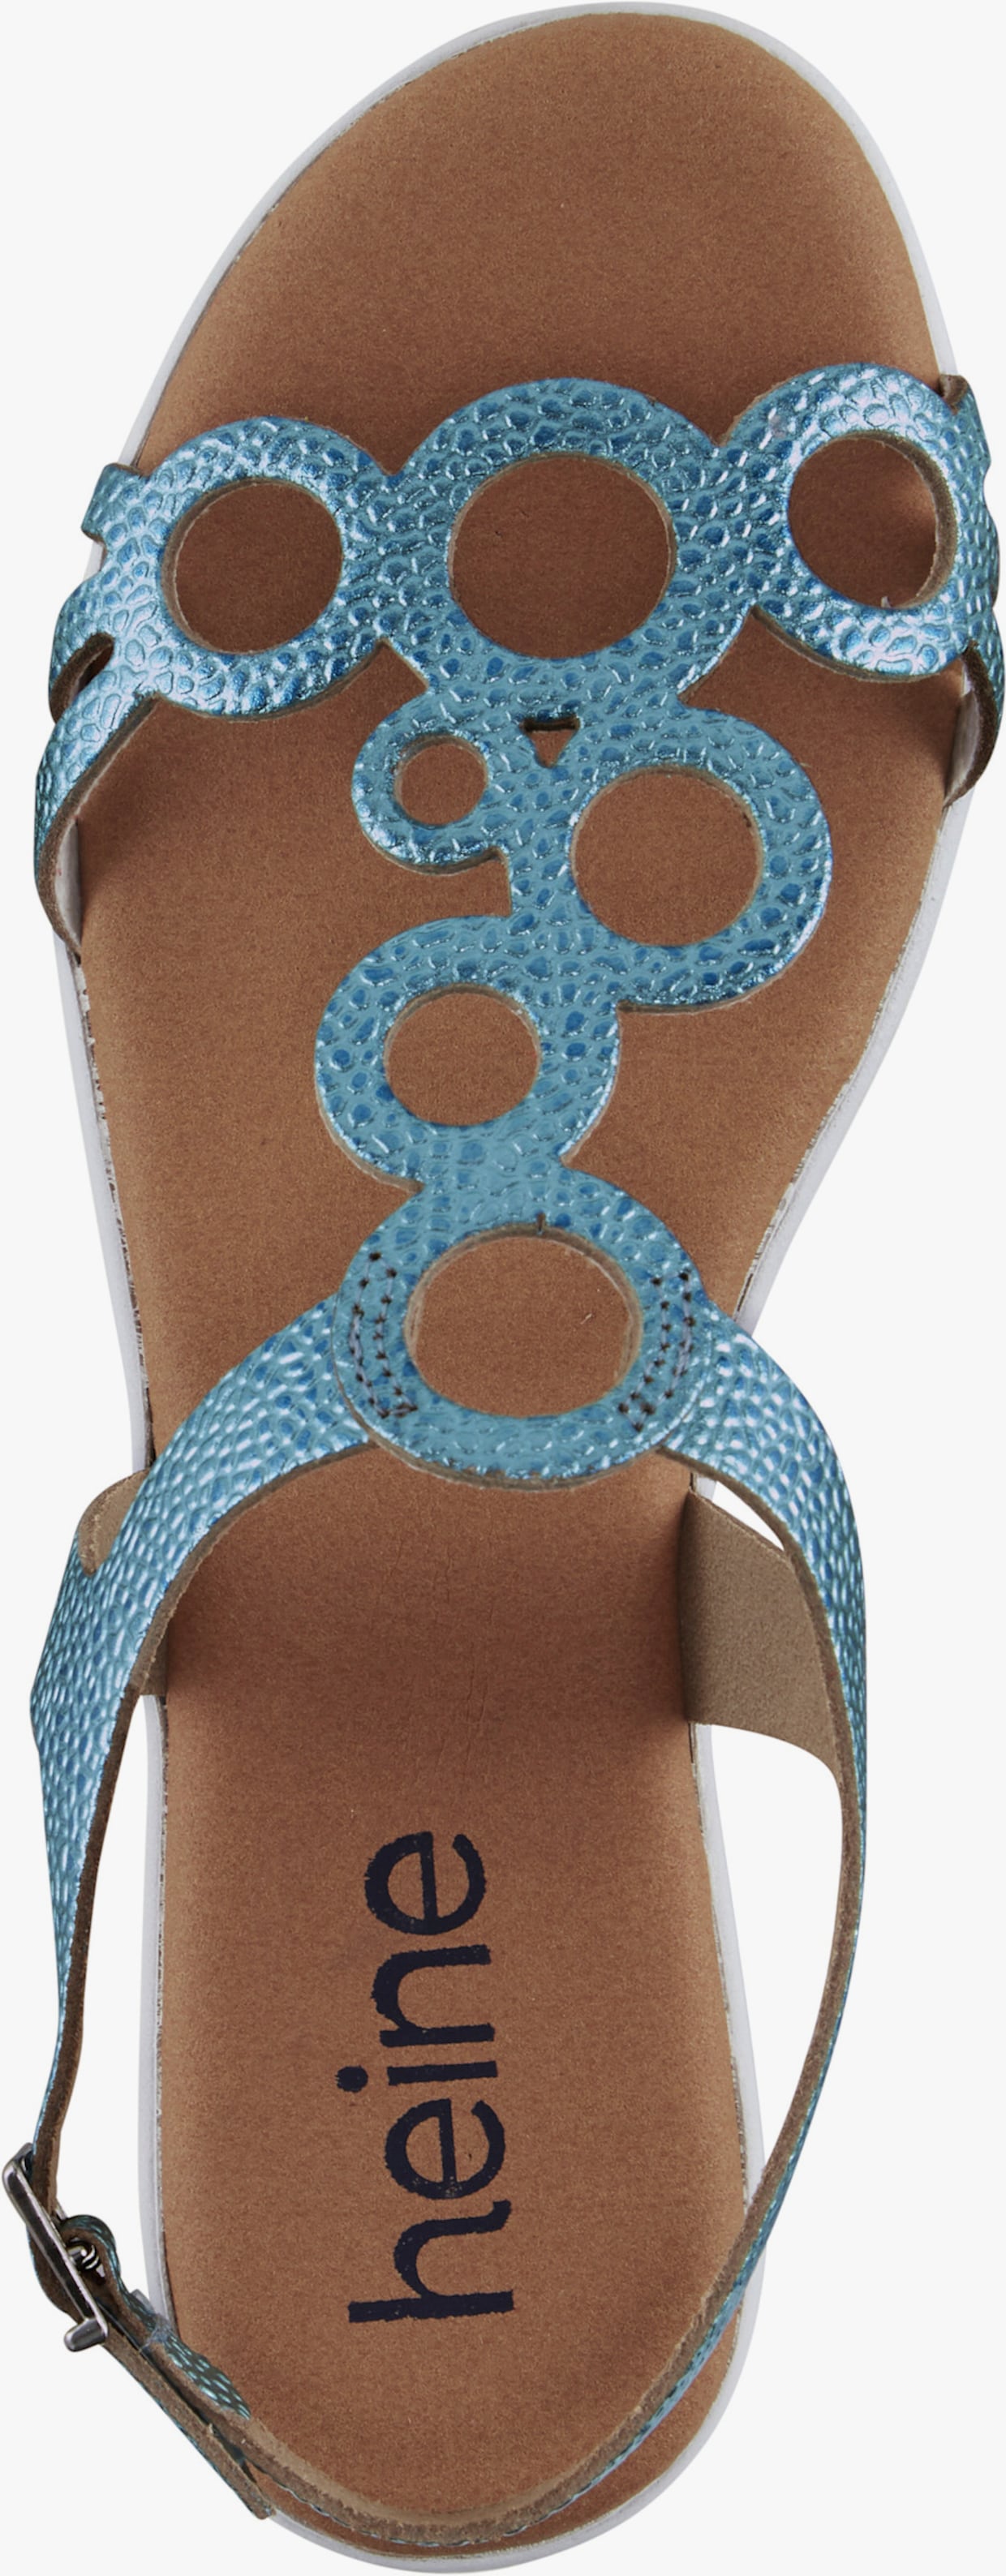 heine sandaaltjes - turquoise/metallic